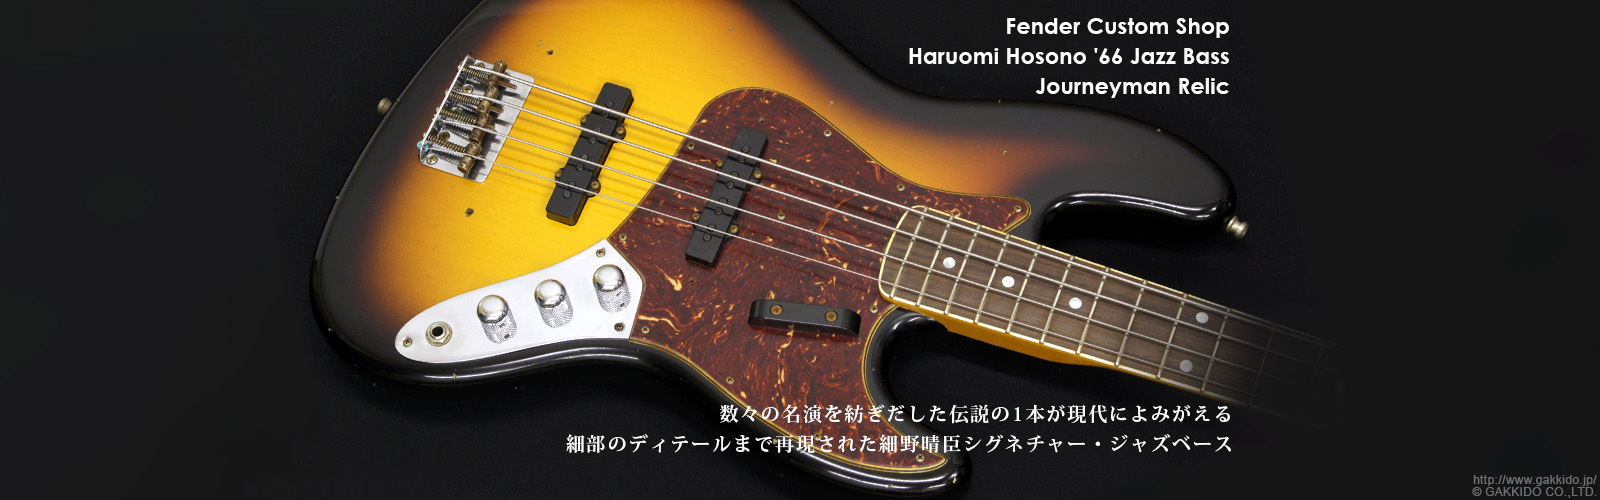 Fender Custom Shop　Haruomi Hosono '66 Jazz Bass Journeyman Relic 細野晴臣 シグネチャーモデル [Faded 3-Tone Sunburst]